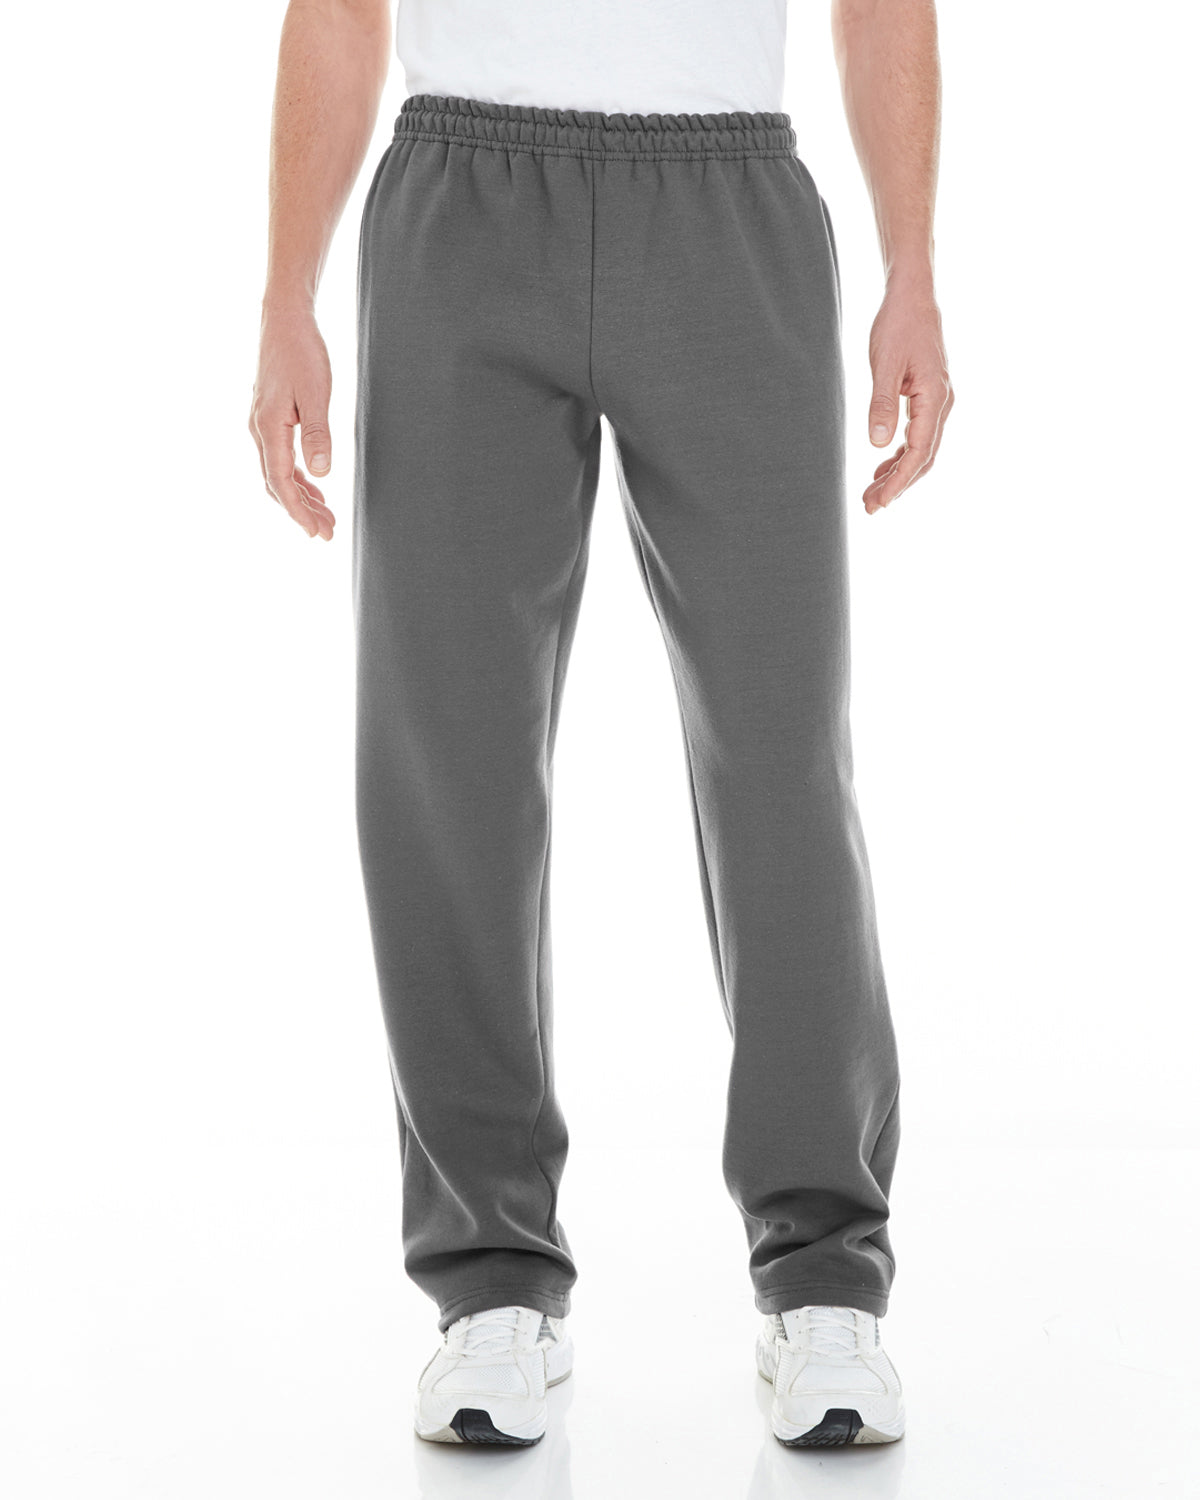 Gildan Adult Open-Bottom Sweatpants with Pockets